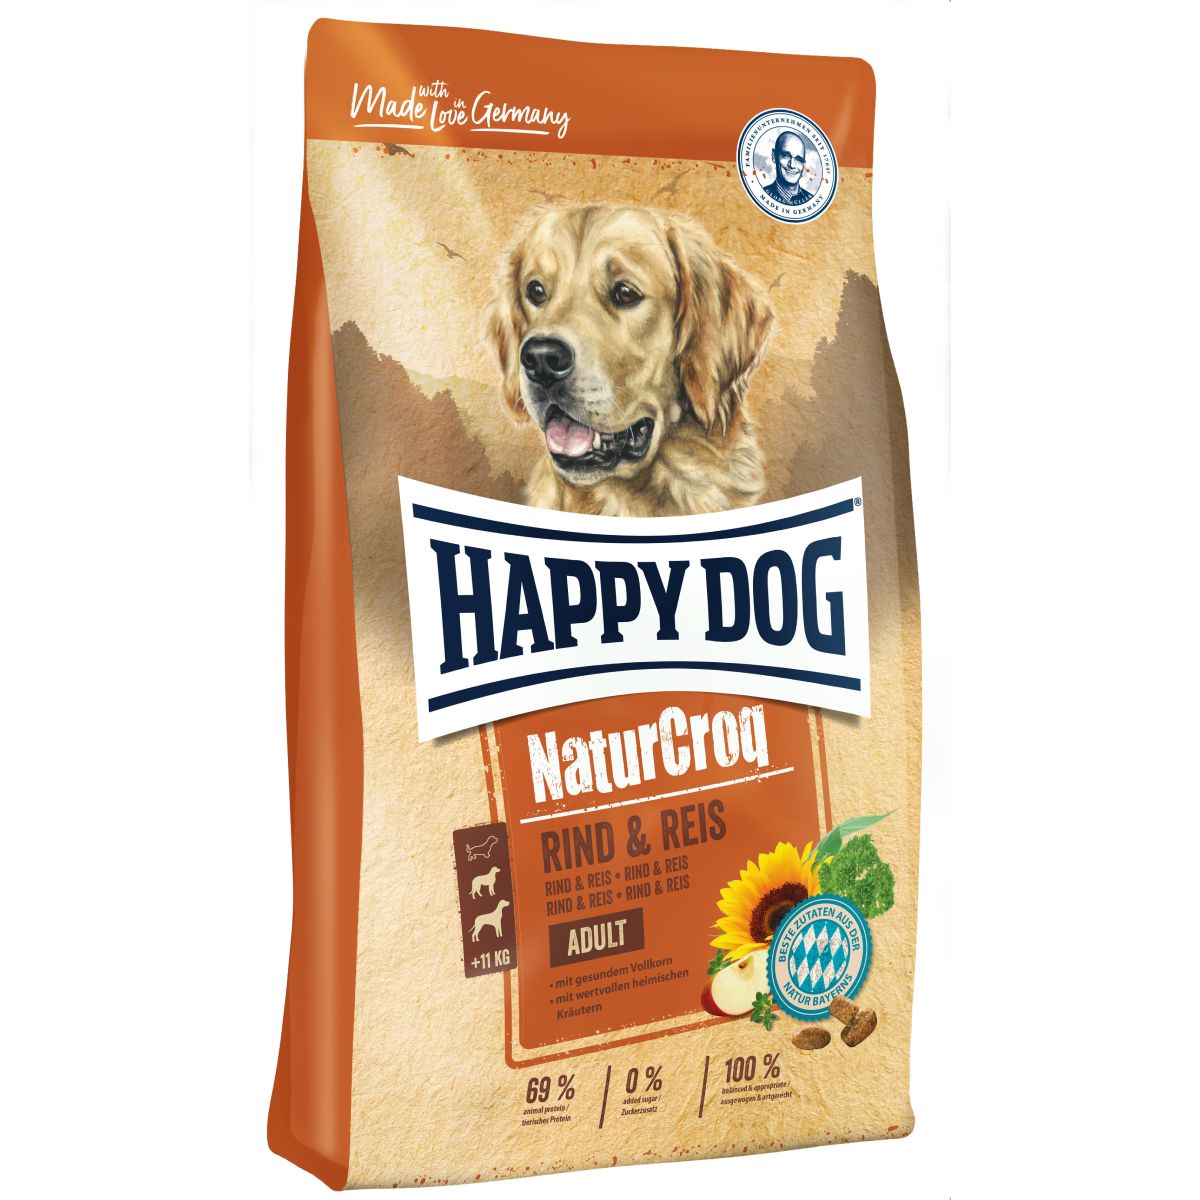 Хэппи дог натур крок ягненок рис 15 кг. Happy Dog НАТУРКРОК (ягненок/рис) -15кг. Натур крок ягненок 15кг. Хэппи дог корм для собак.